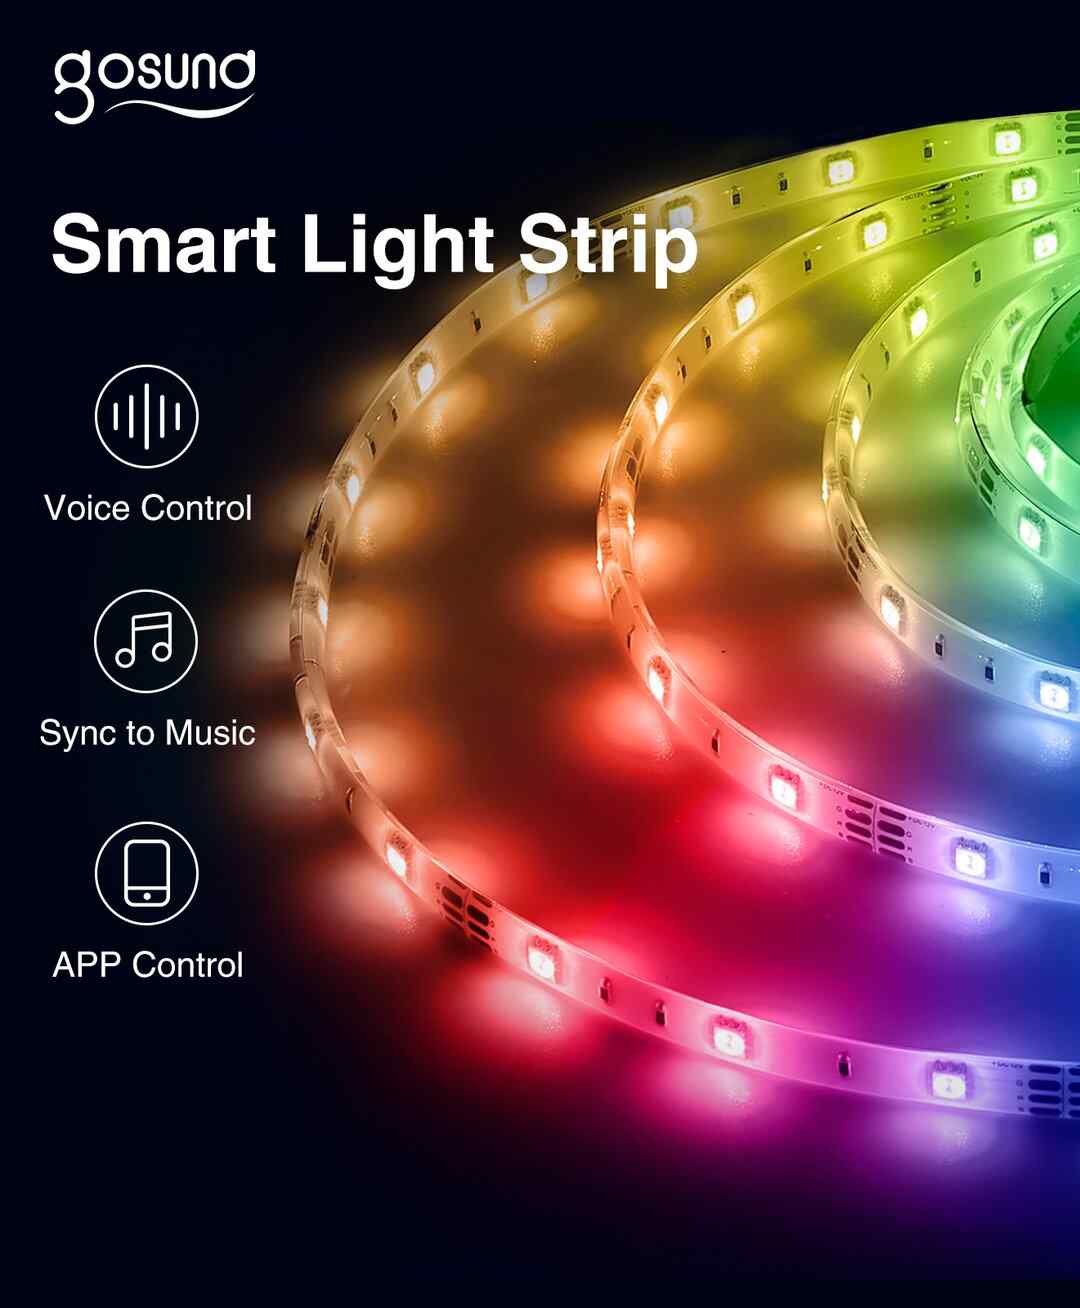 Wi-Fi Smart LED light strip Gosund NiteBird SL2 (5m)